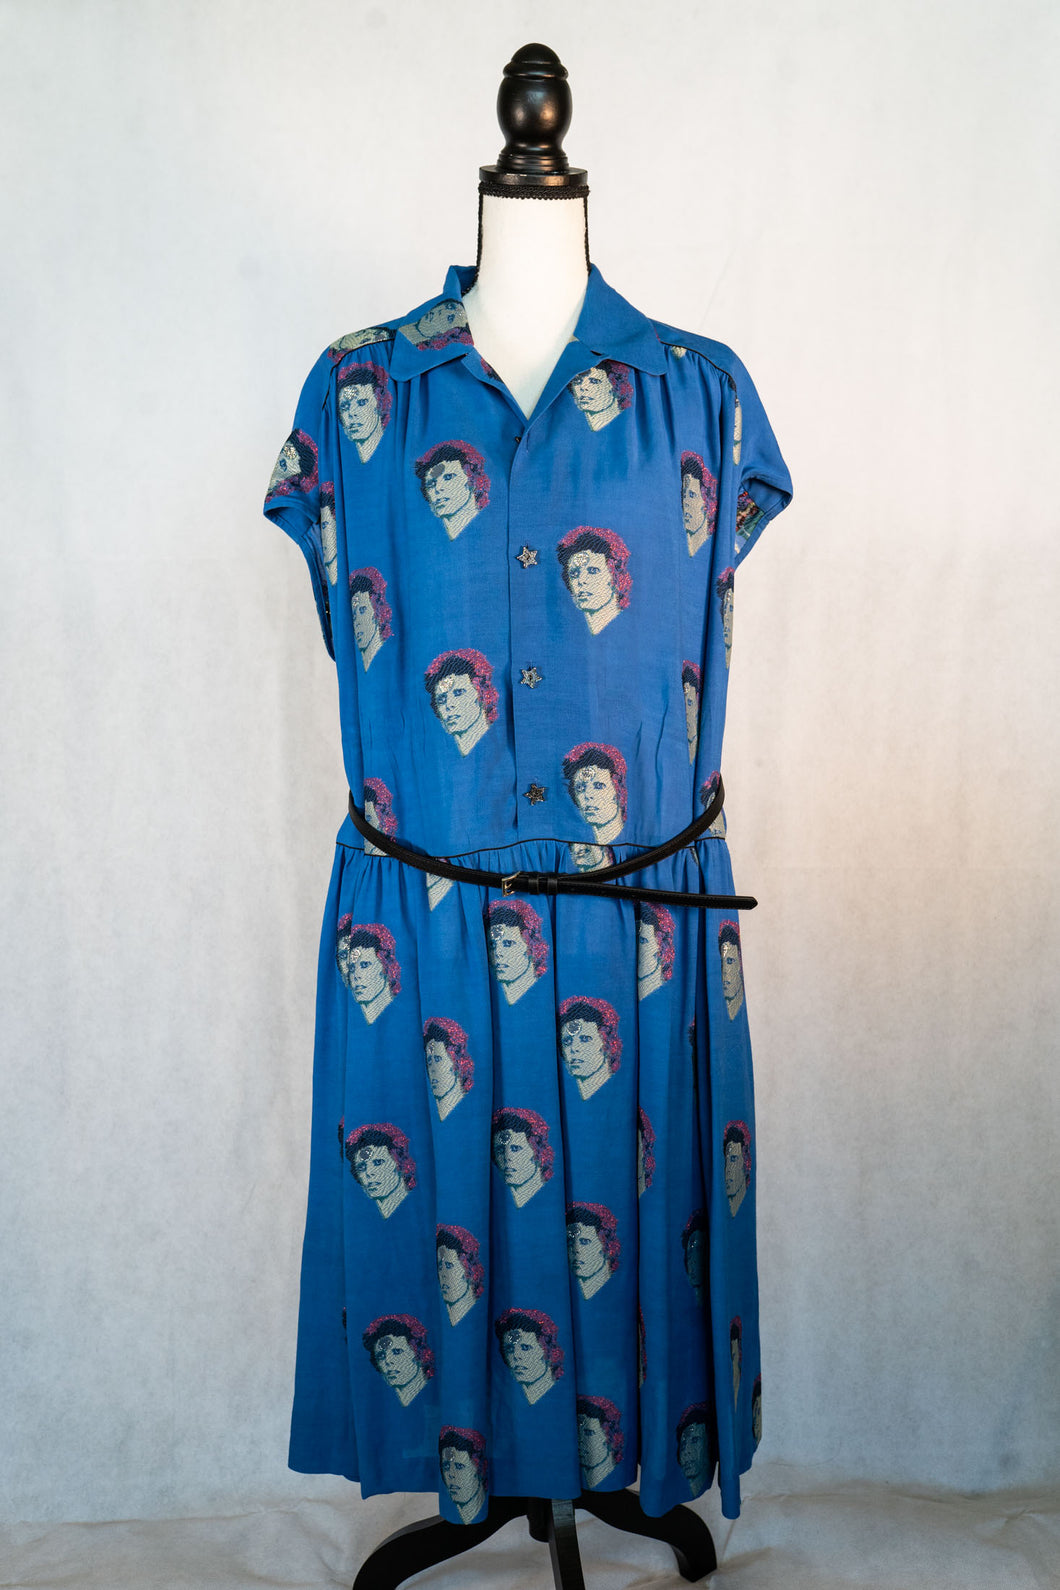 Undercover Jun Taskashi David Bowie Allover print Blue Dress - 3 (Large)